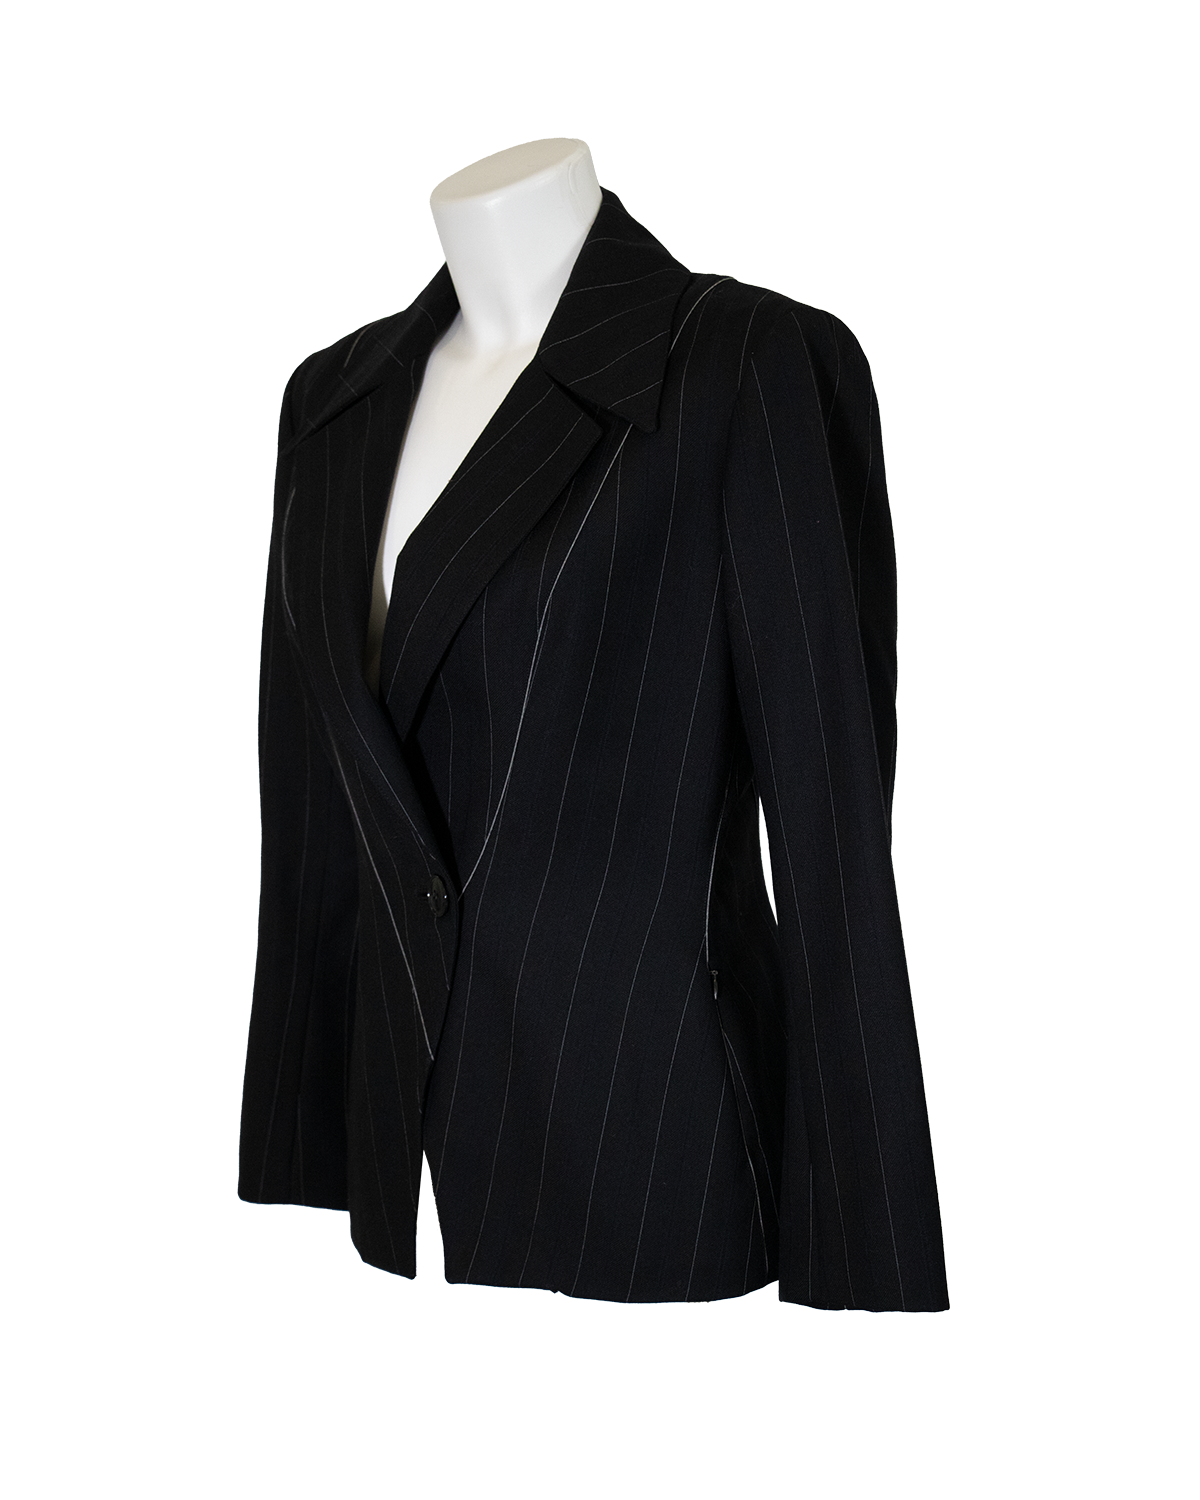 Azzedine Alaia Wool Black Jacket from 1980s